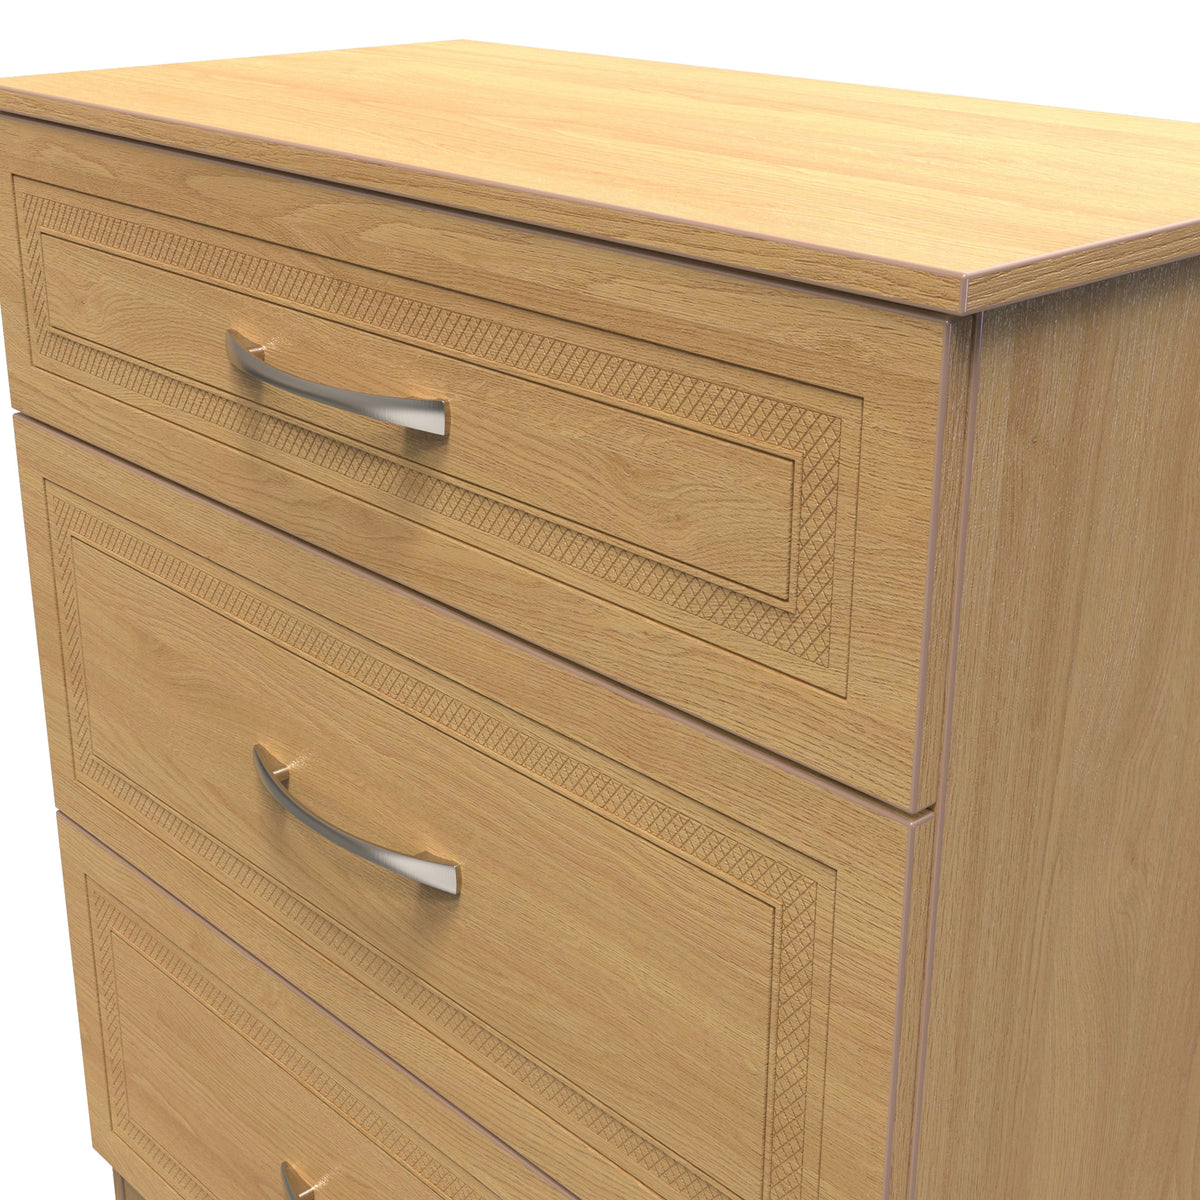 Kilgarth Modern Oak 3 Drawer Deep Chest by Roseland Furniture